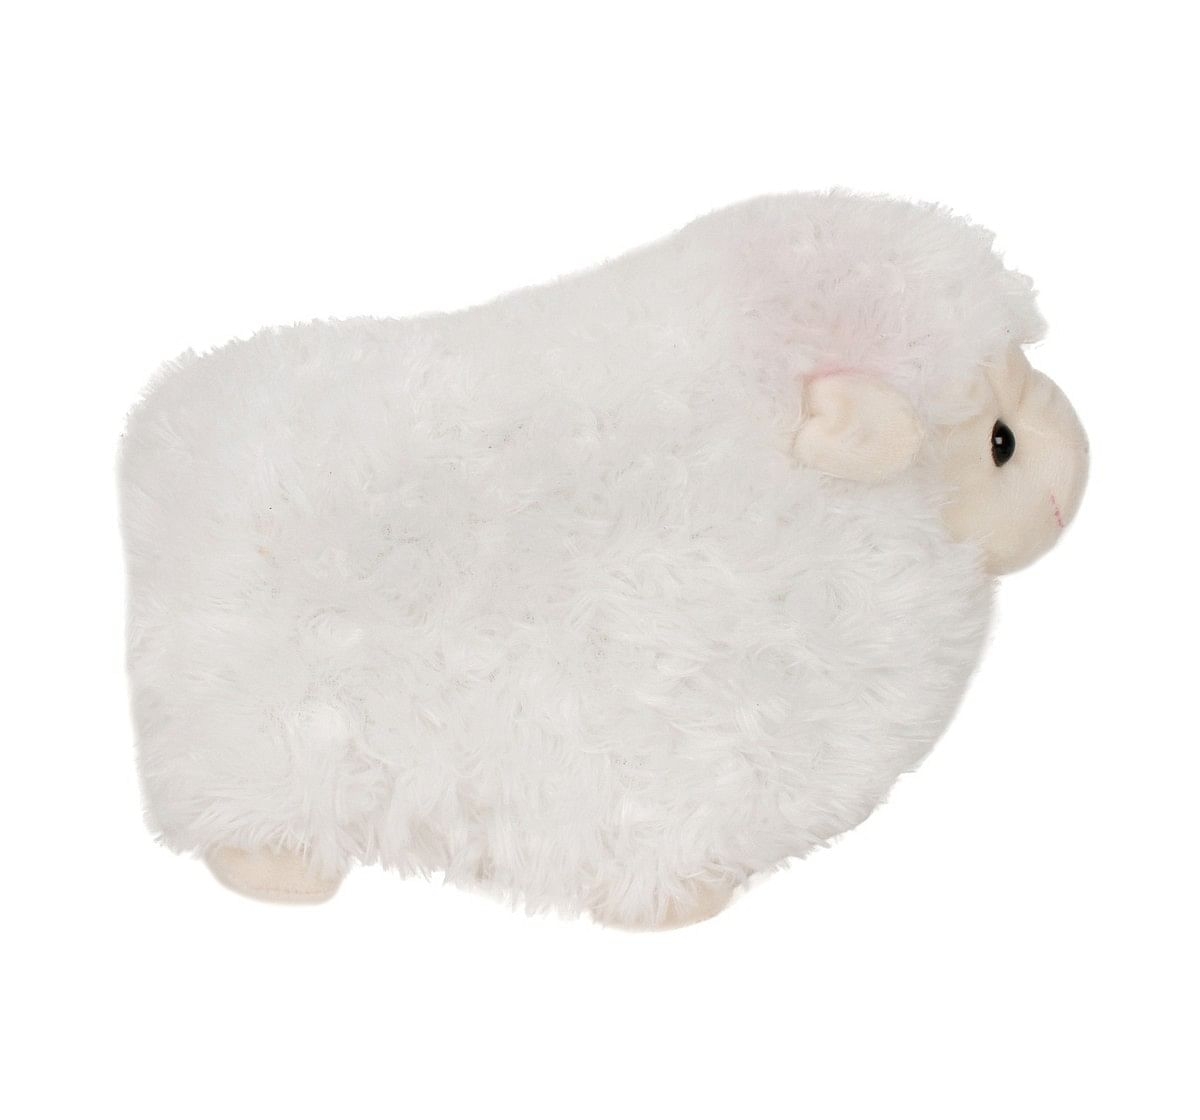 Fuzzbuzz White Lamb Stuffed Animal - 28Cm Quirky Soft Toys for Kids age 0M+ - 20 Cm (White)